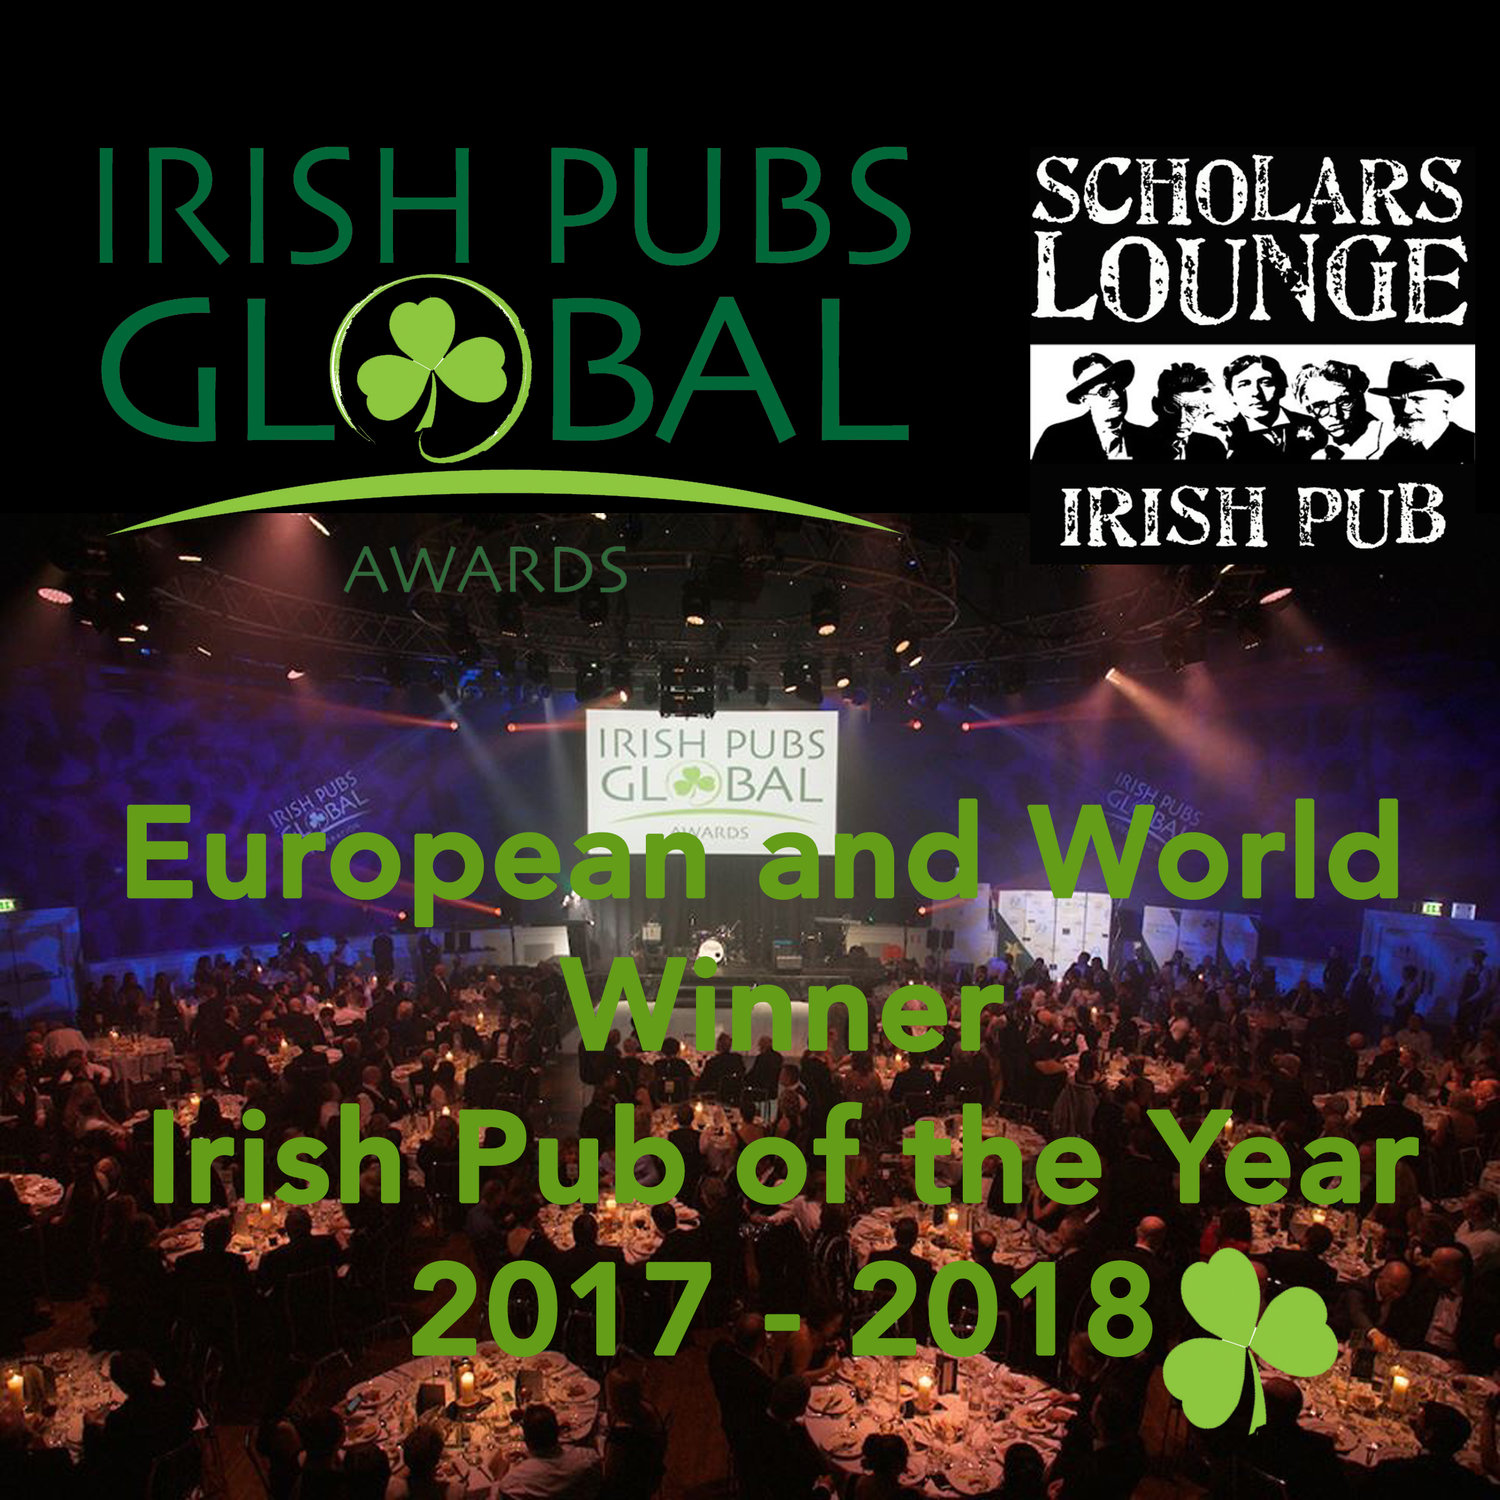 Scholars Lounge Irish Pub Rome